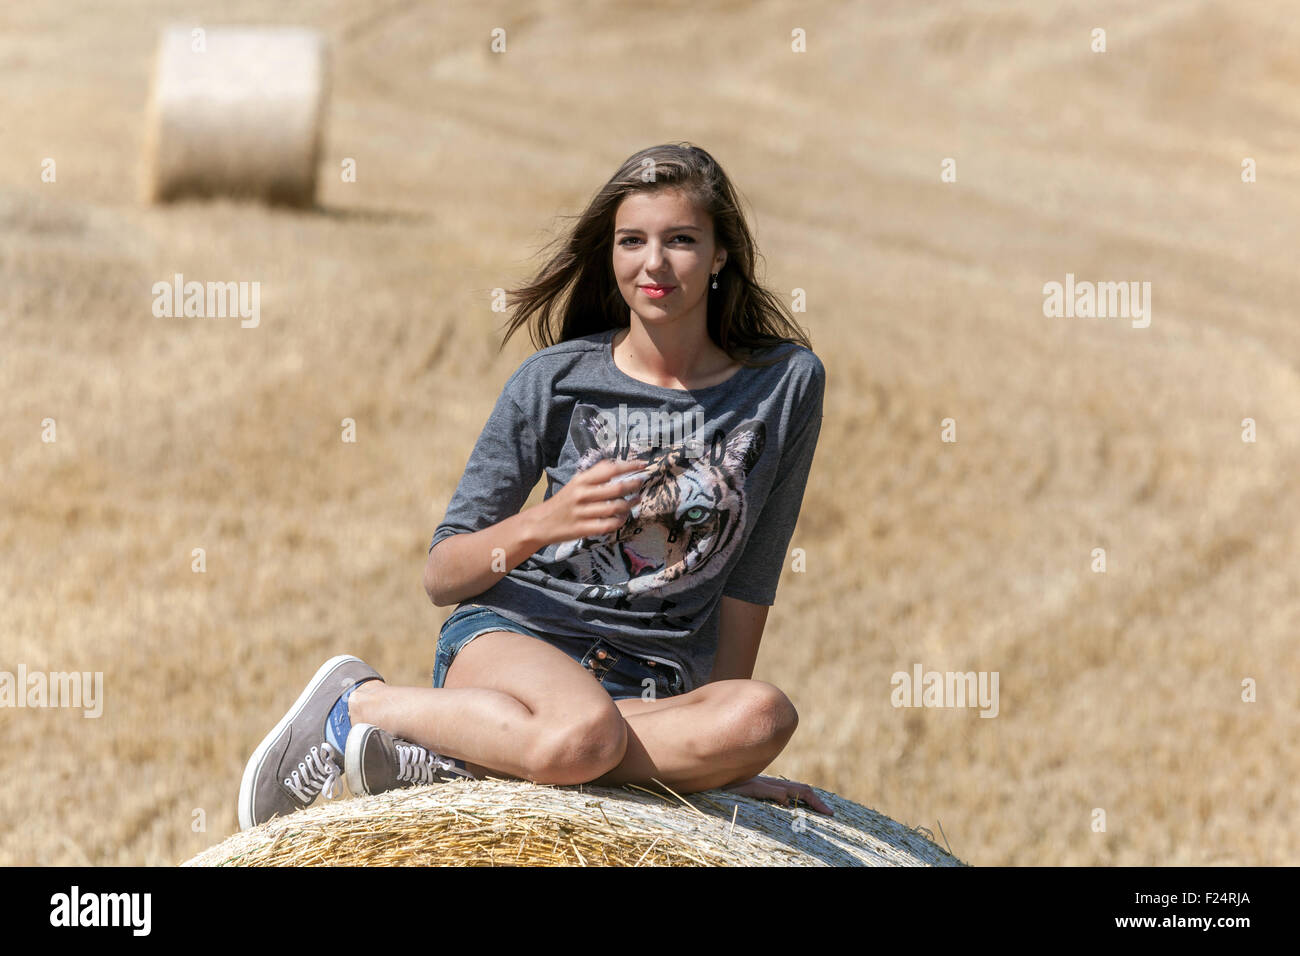 Young beautiful girl on straw bale Stock Photo